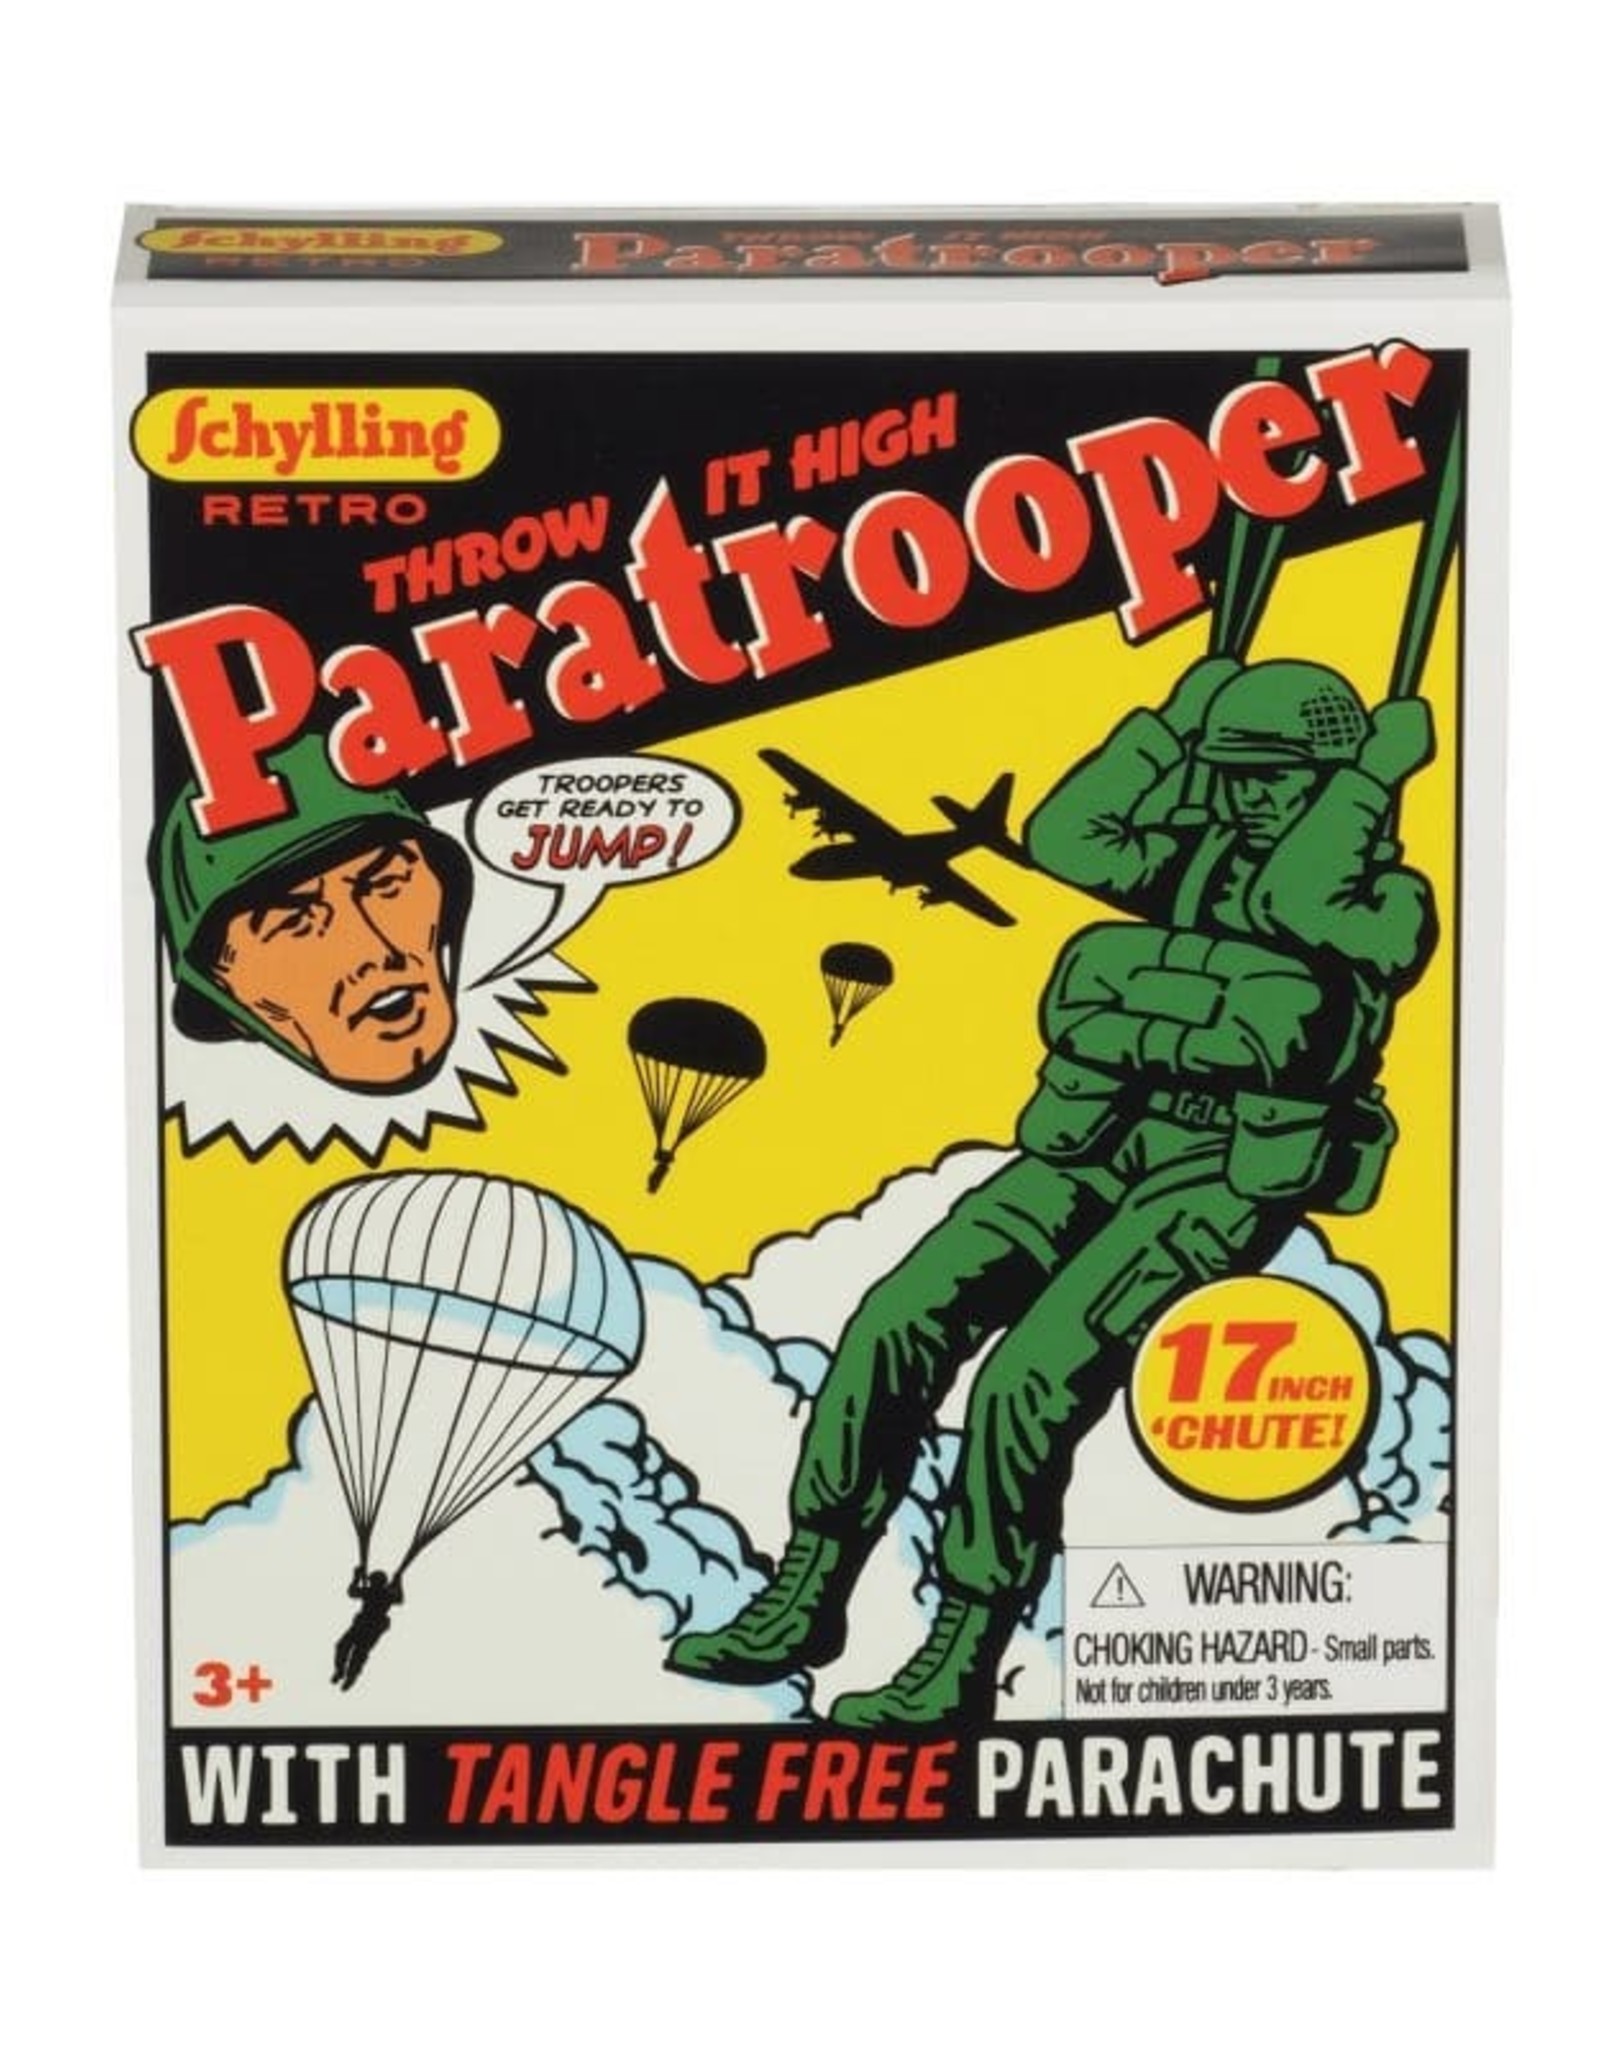 Schylling Retro Paratrooper